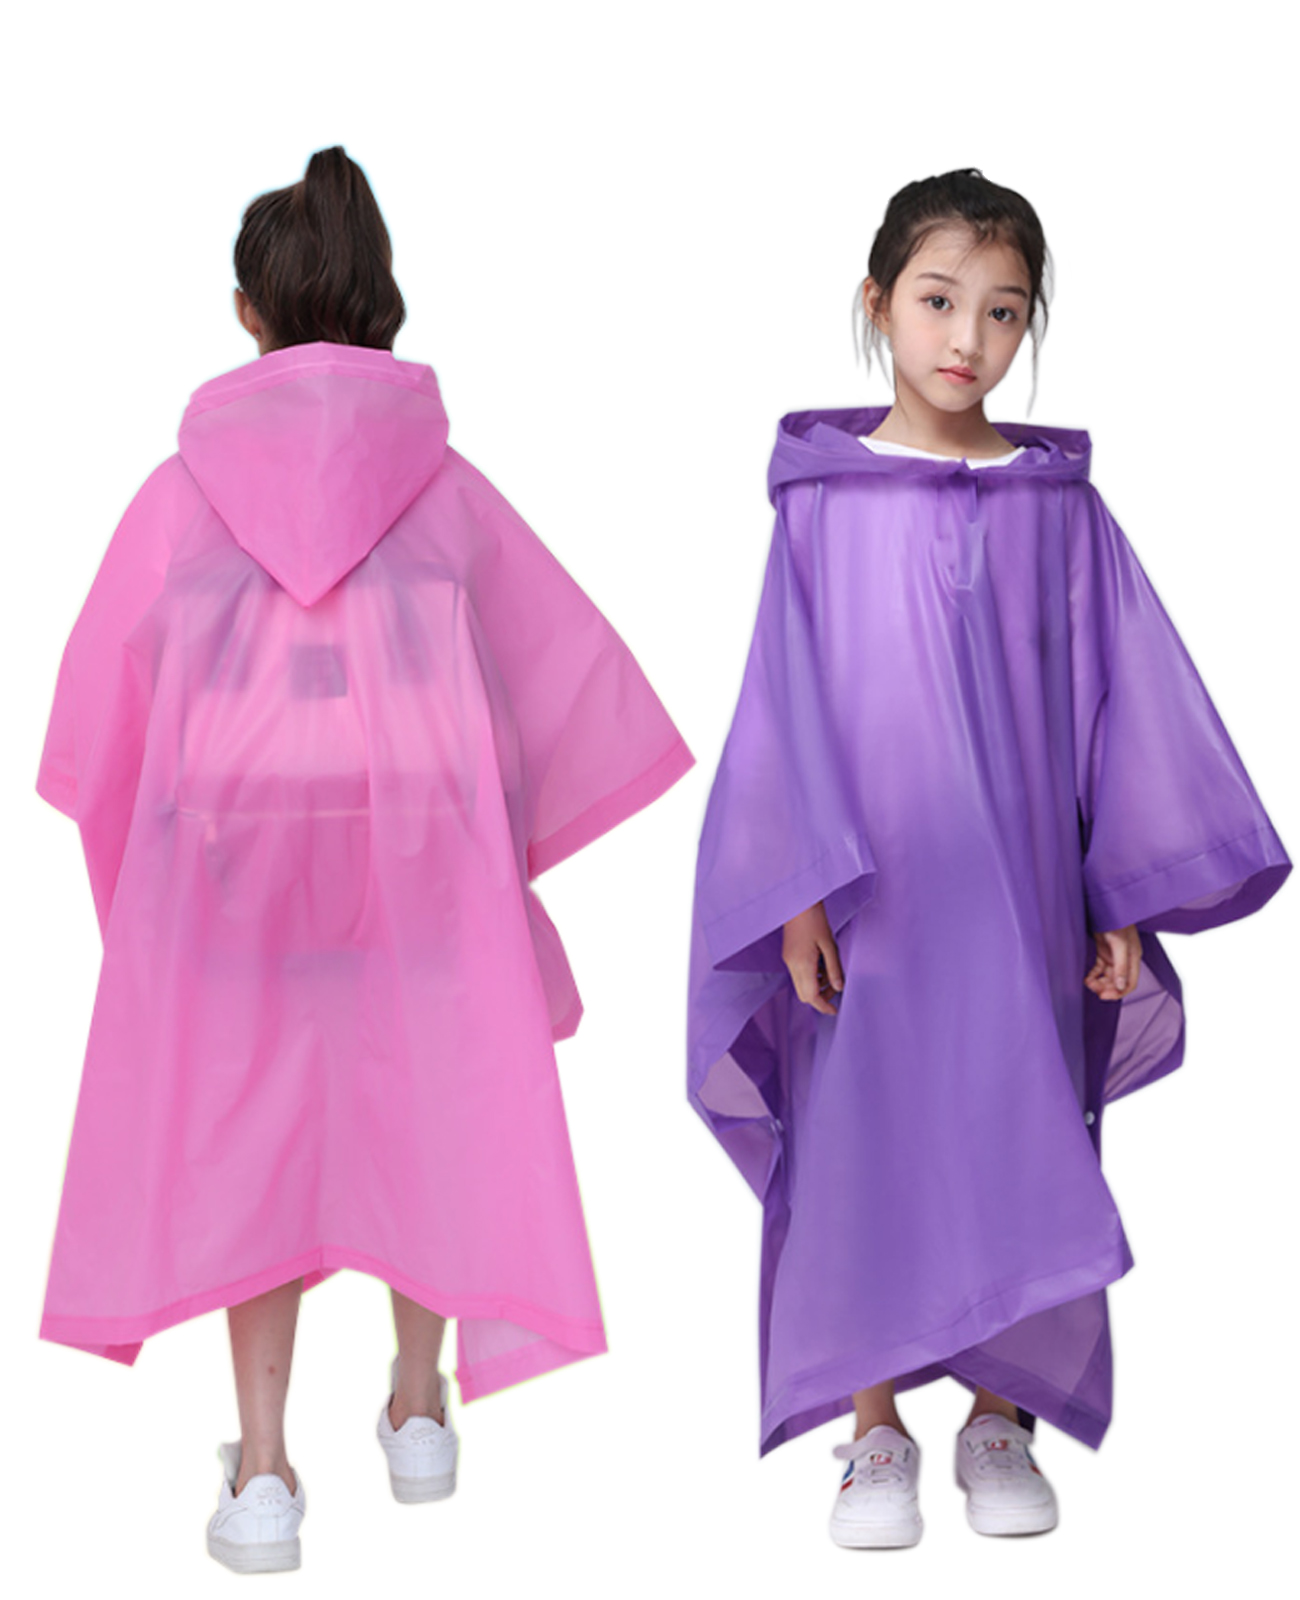 Makonus Rain Ponchos for Kids, [2 Pack] EVA Reusable Raincoat for Boys & Girls, Pink & Purple